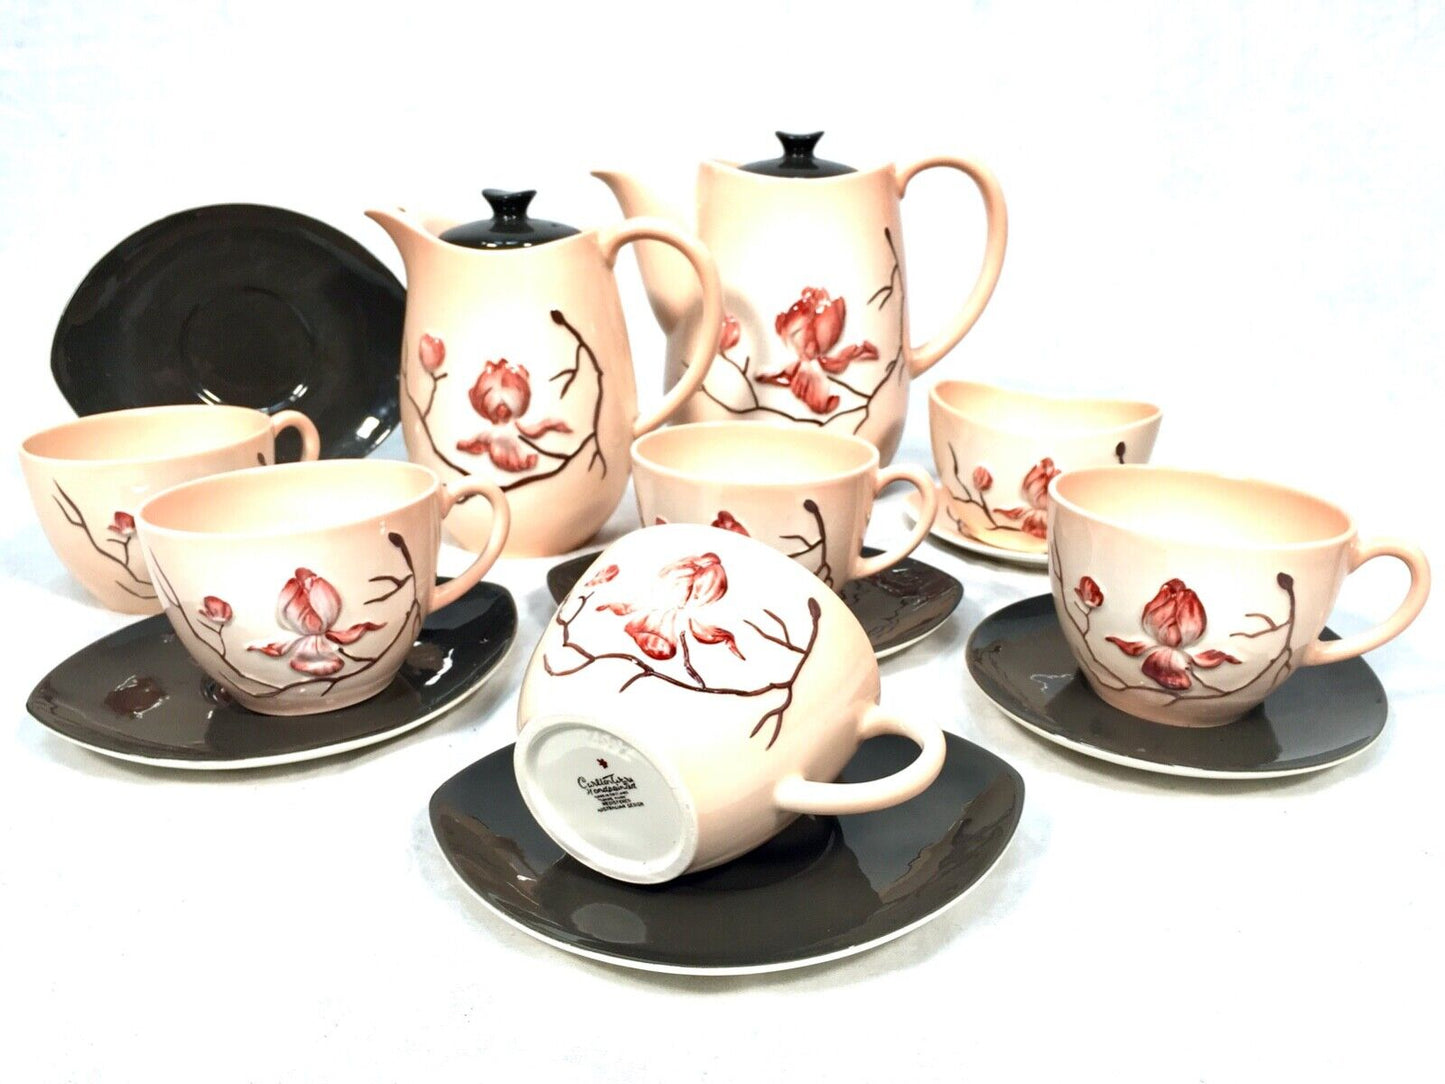 Carlton Ware Australian Design Hand Painted Tea / Coffee Set / Cup & Saucer